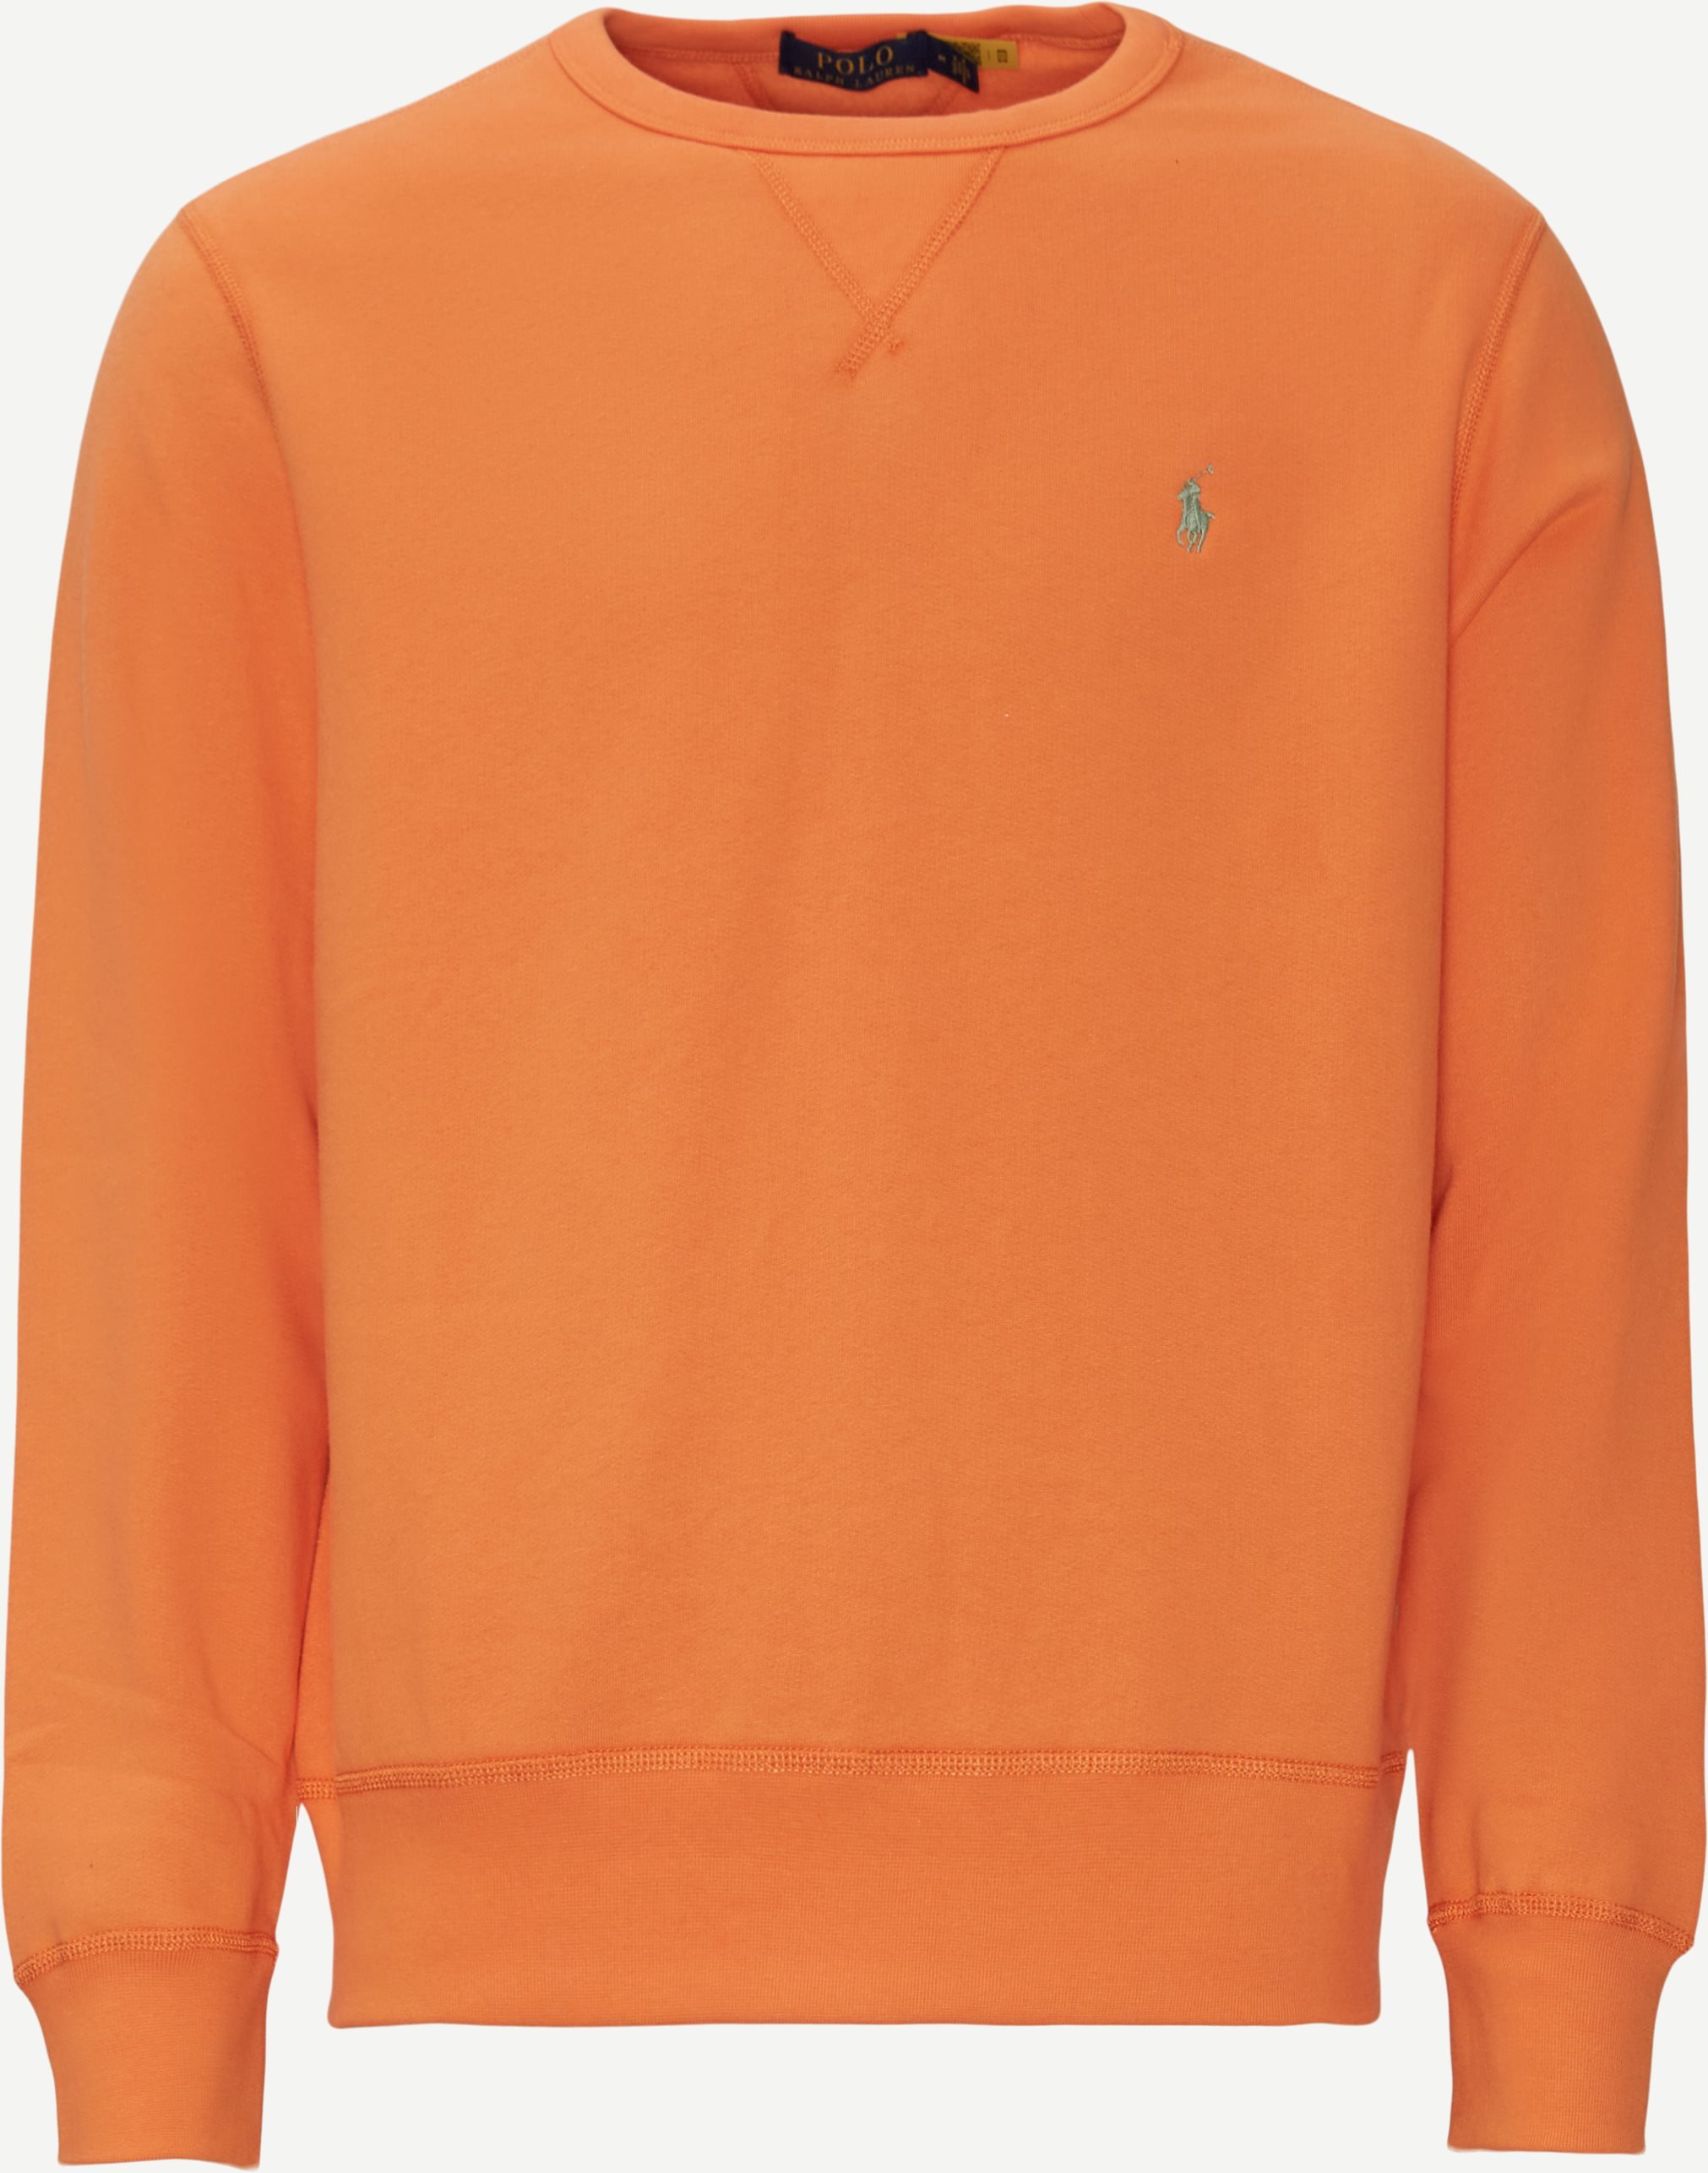 Sweatshirts - Regular fit - Orange